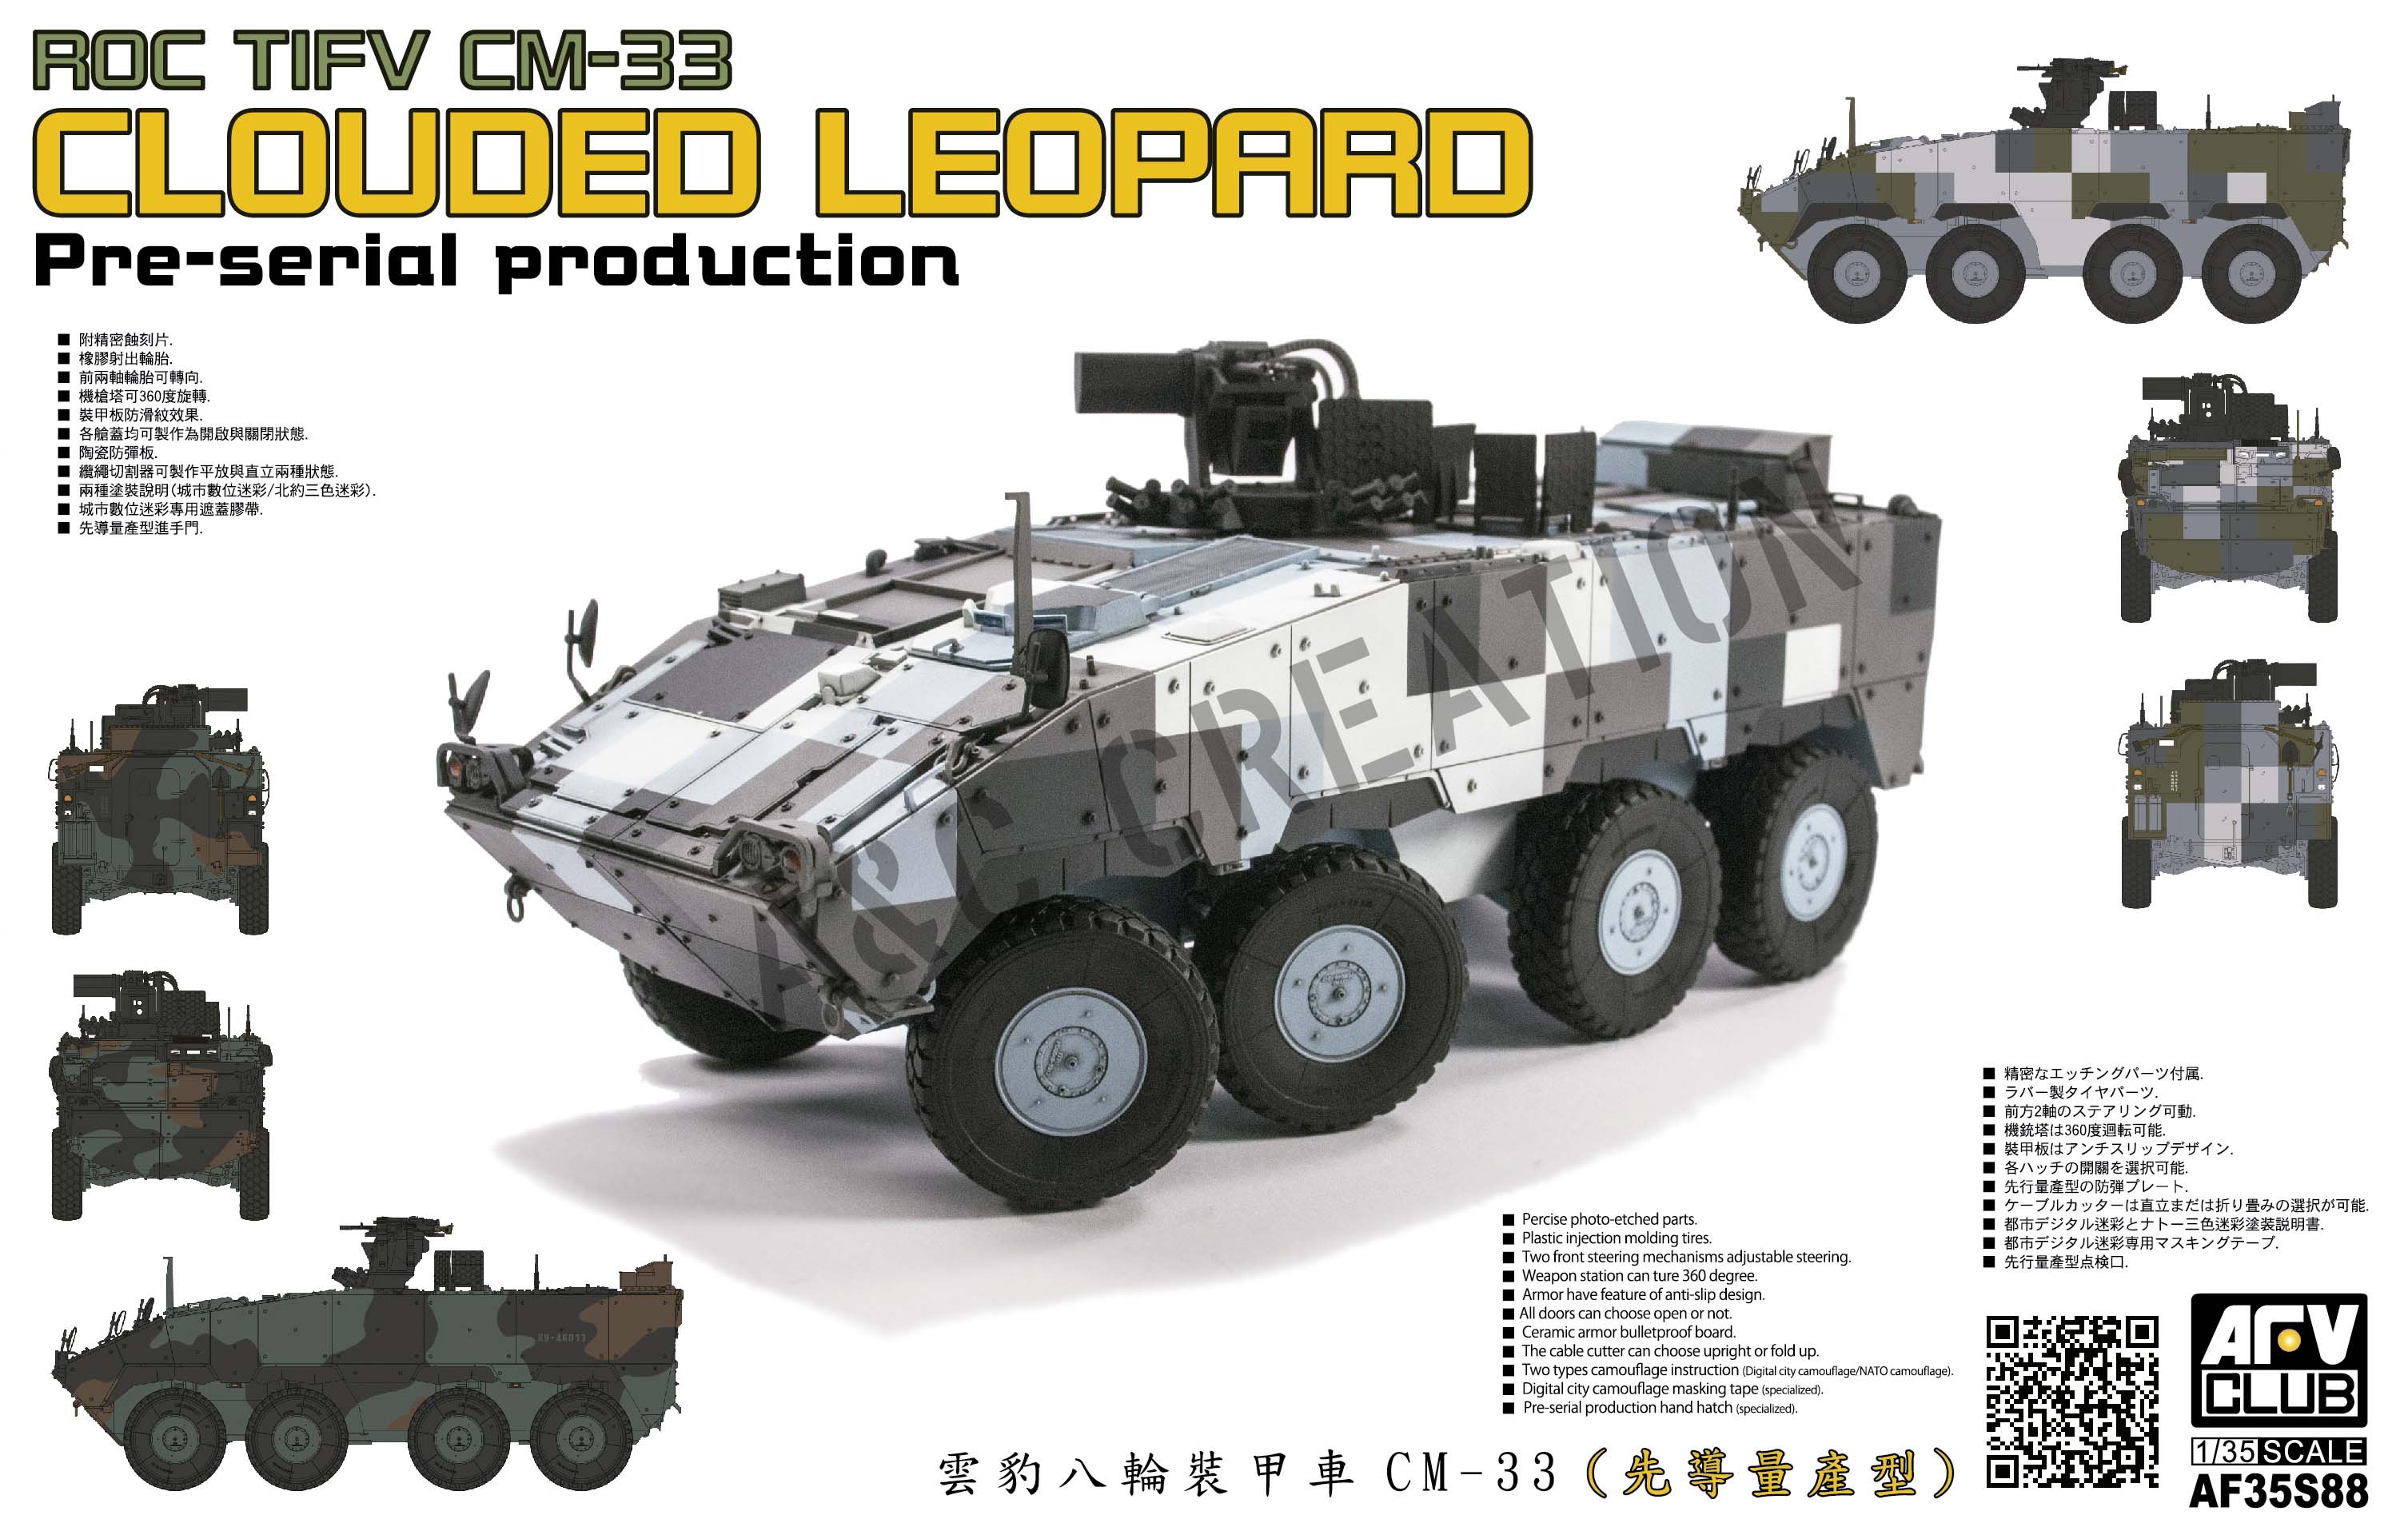 AF35S88 Clouded Leopard ROC TIFV CM-33 (Pre-serial Production)